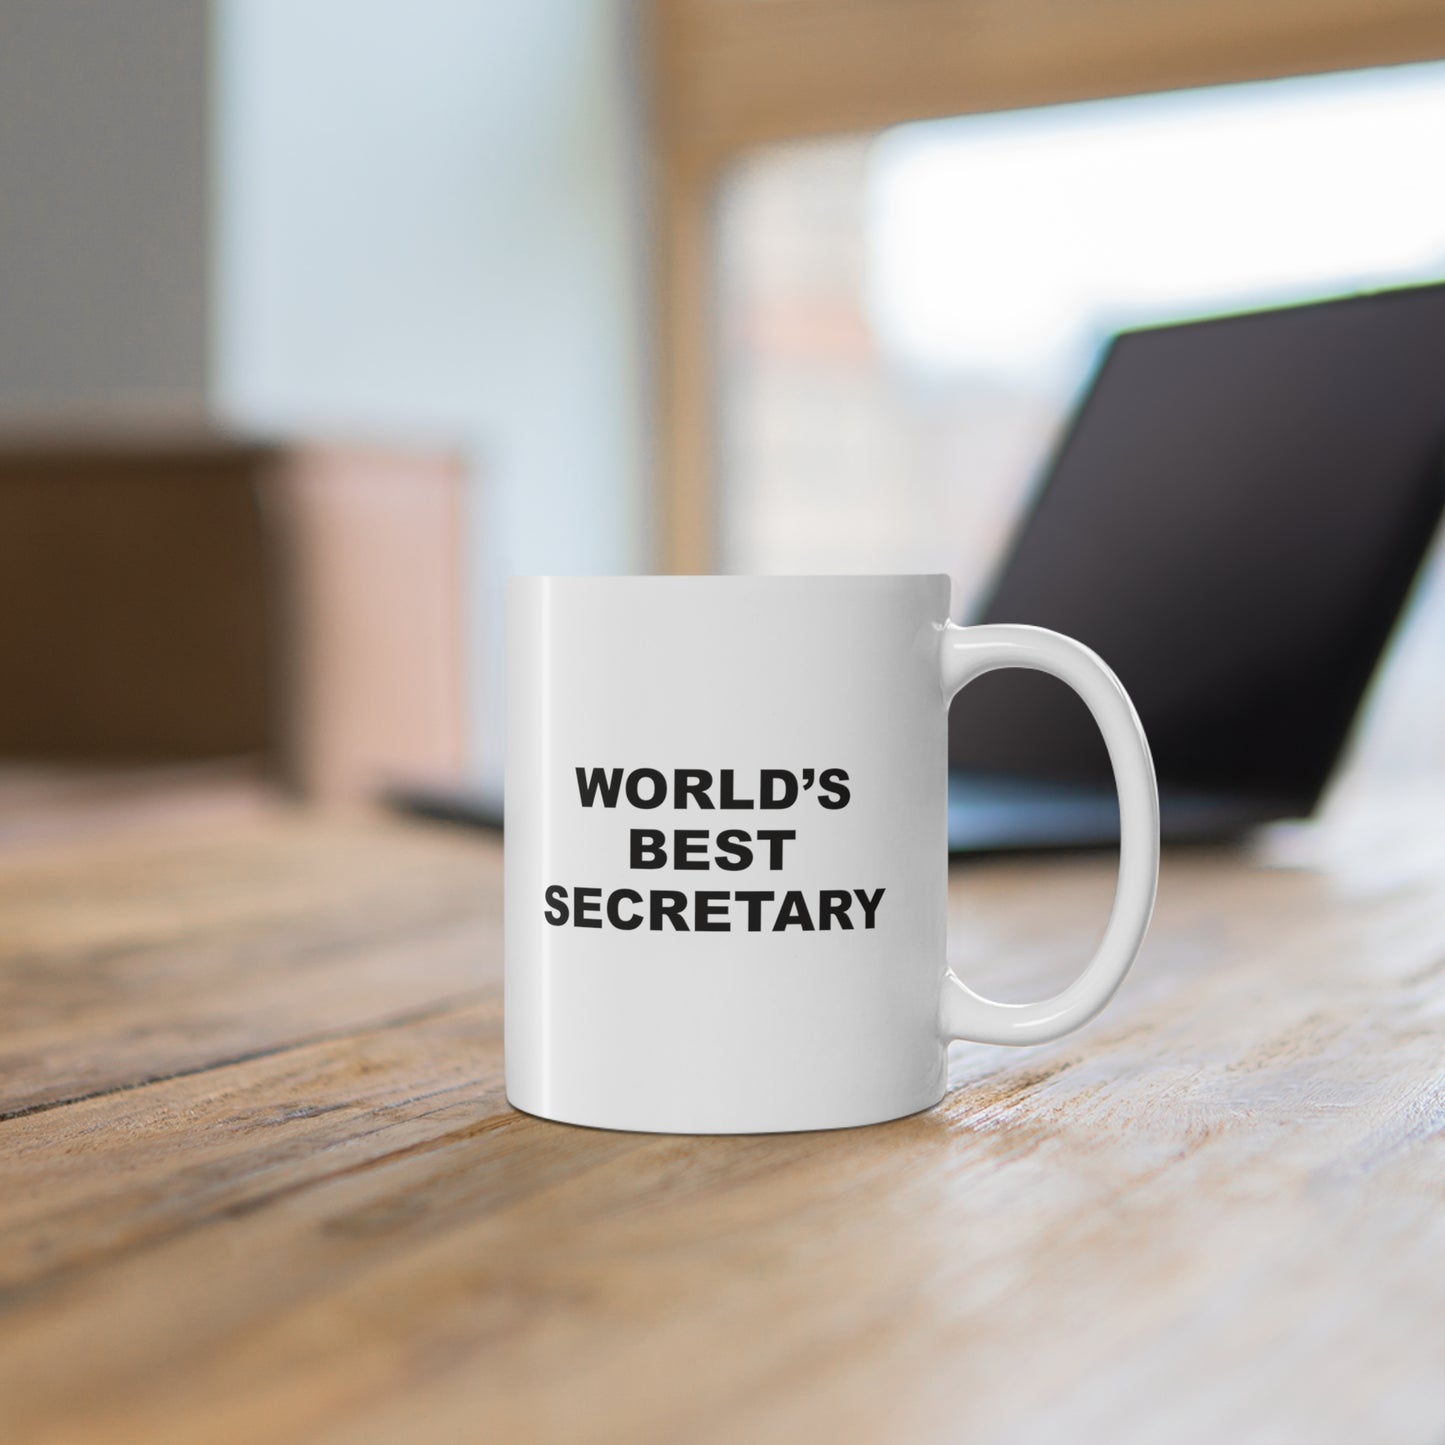 11oz ceramic mug with quote World's Best Secretary